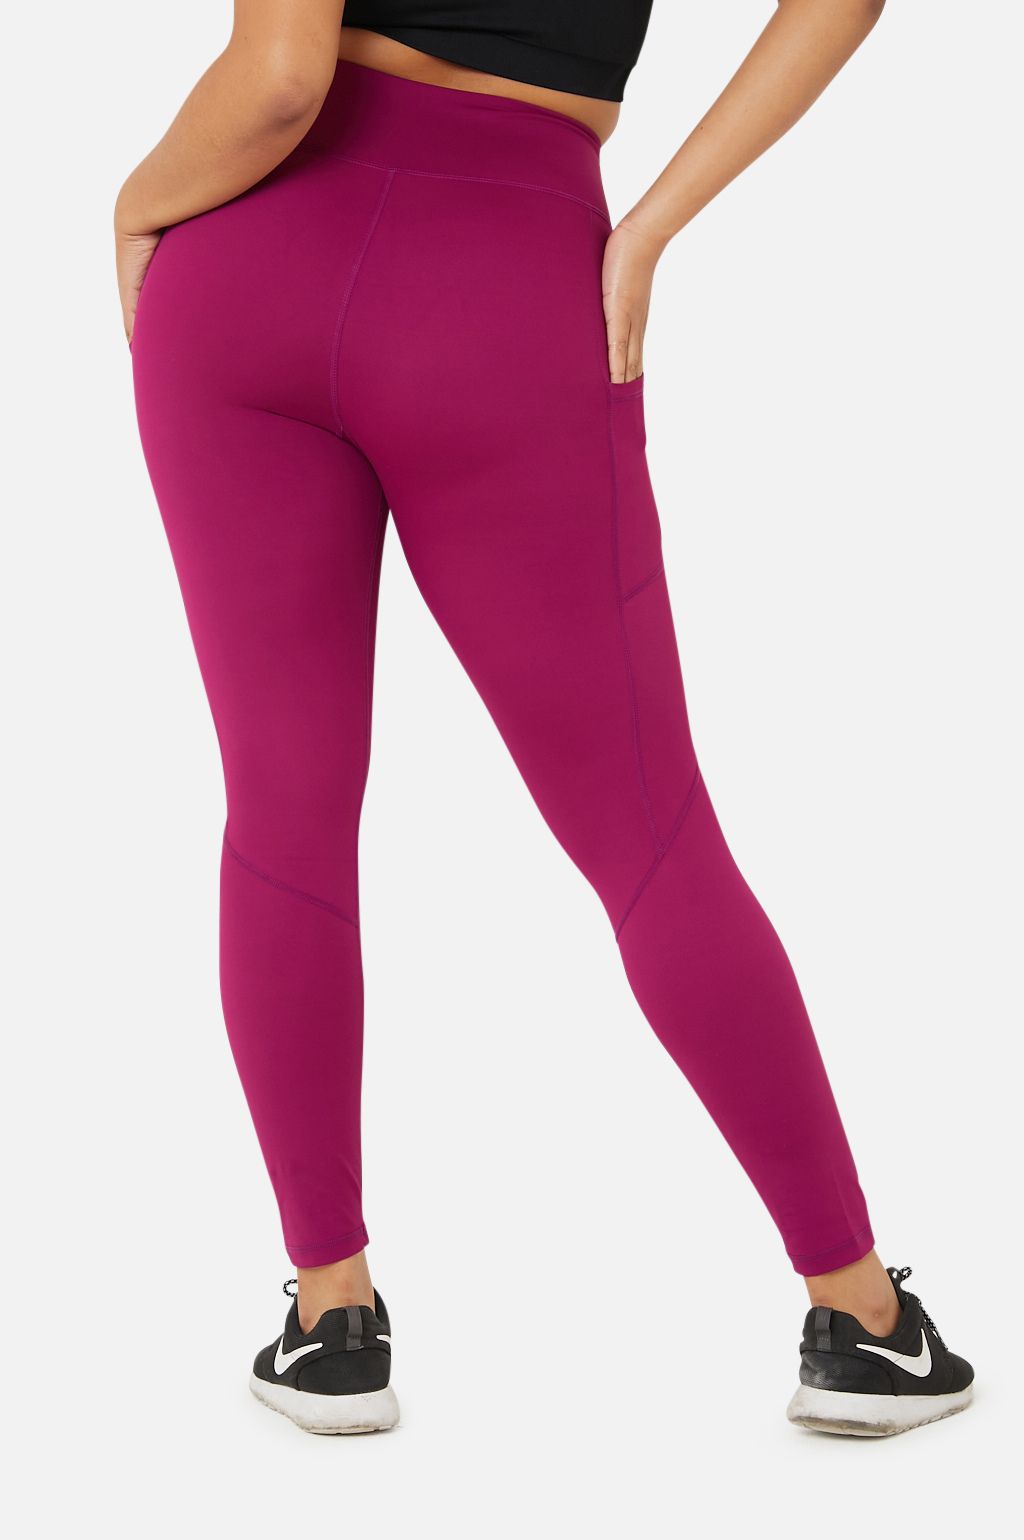 Black & Pink, Thigh-high, High Waist Gym Leggings With Pockets 